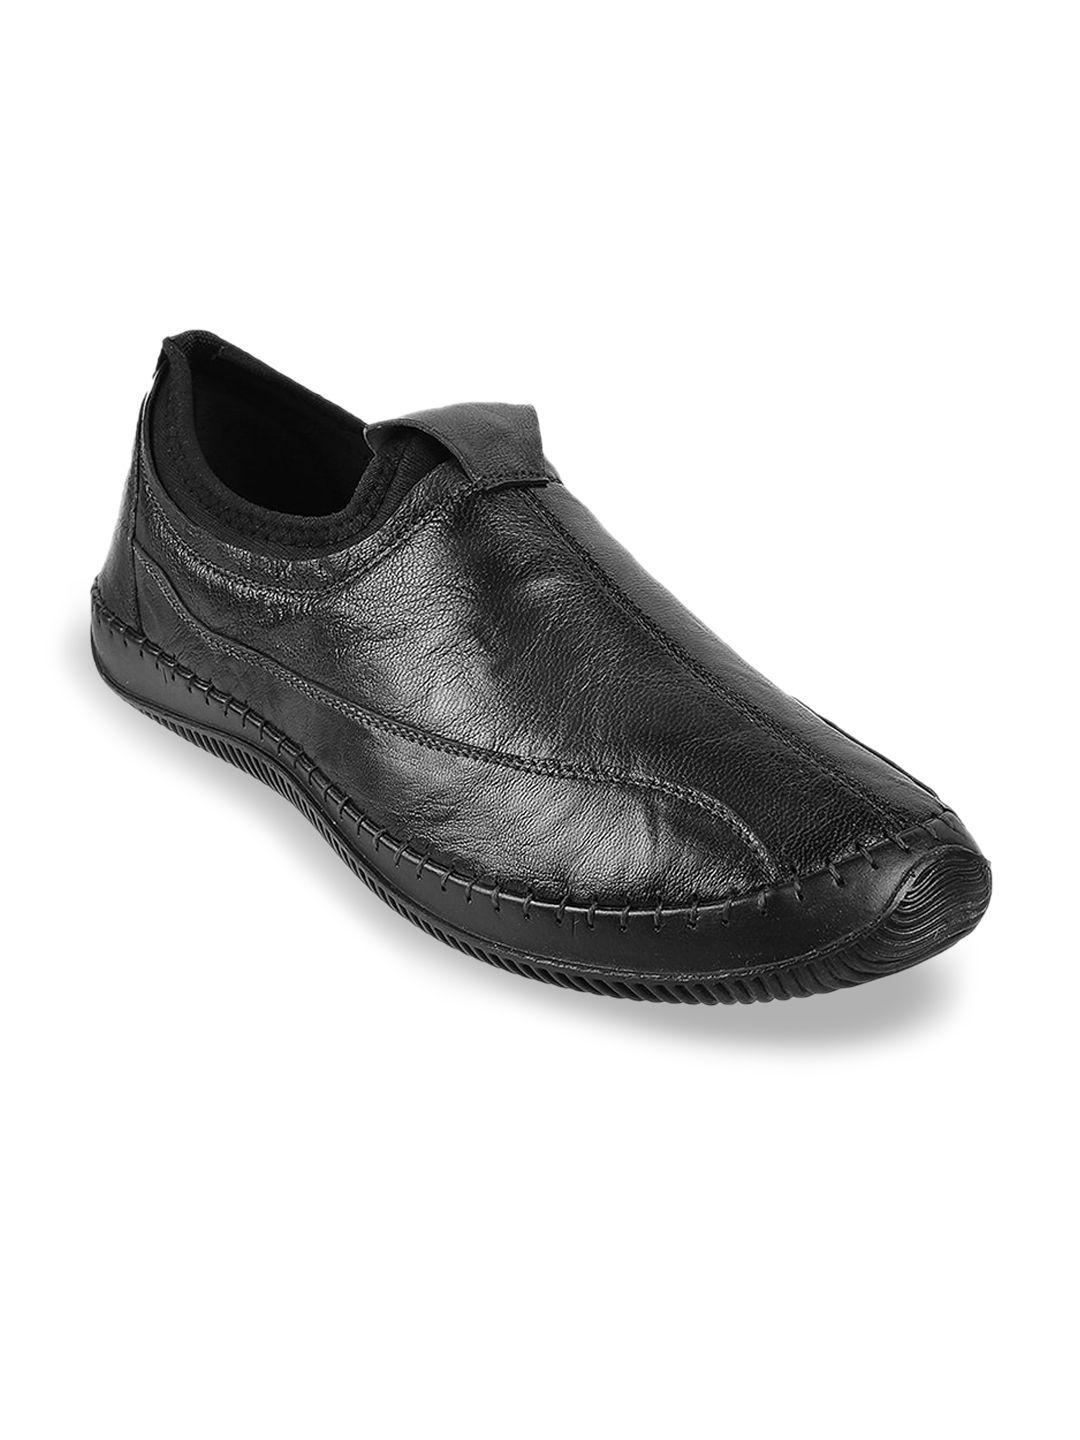 metro-men-black-leather-slip-on-sneakers